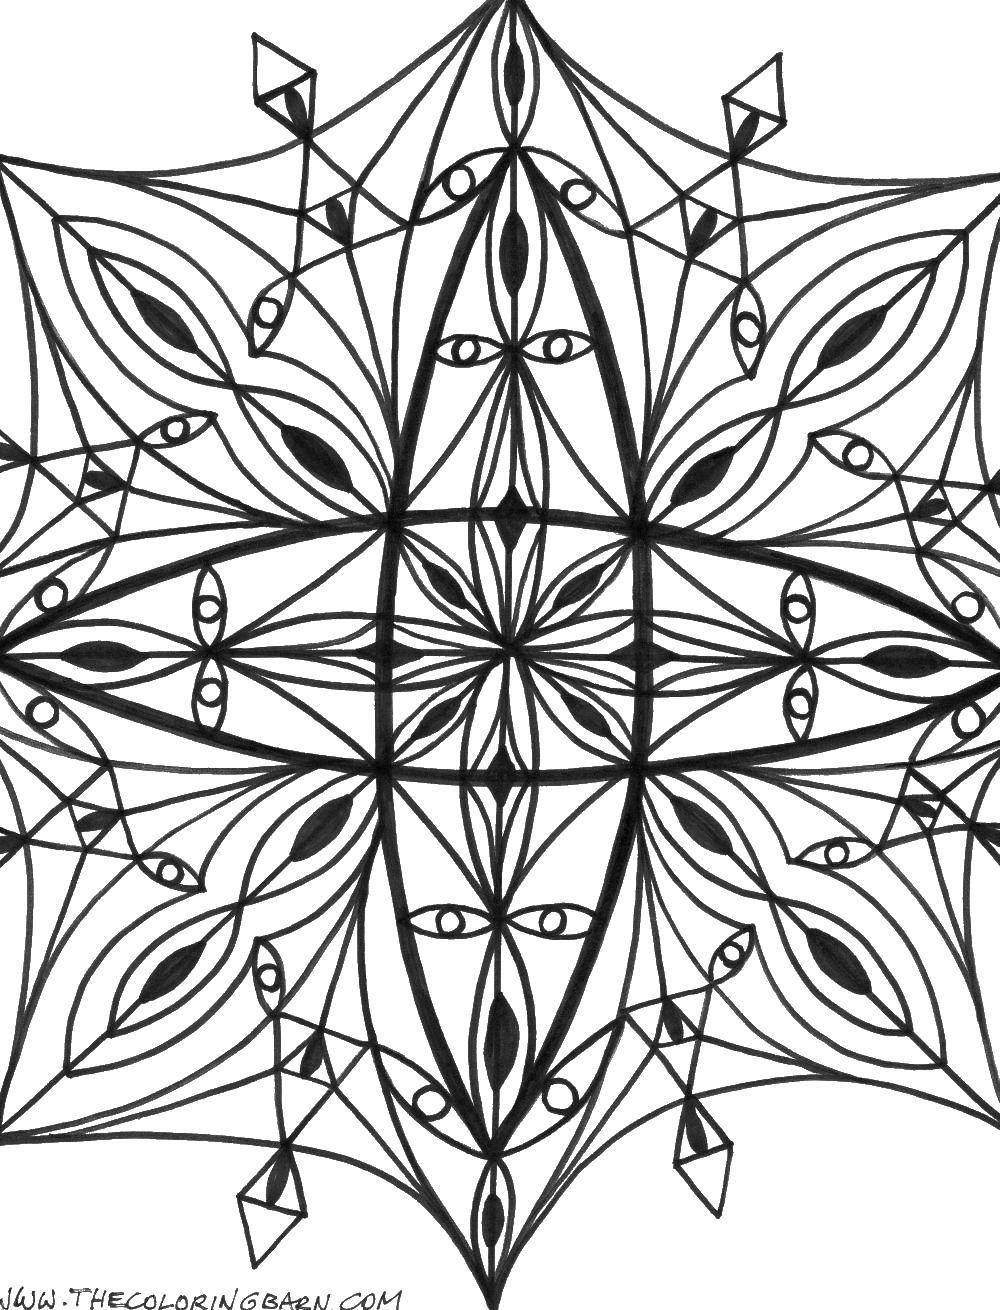 Coloring Kaleidoscope. Category Kaleidoscope. Tags:  kaleidoscope, patterns.